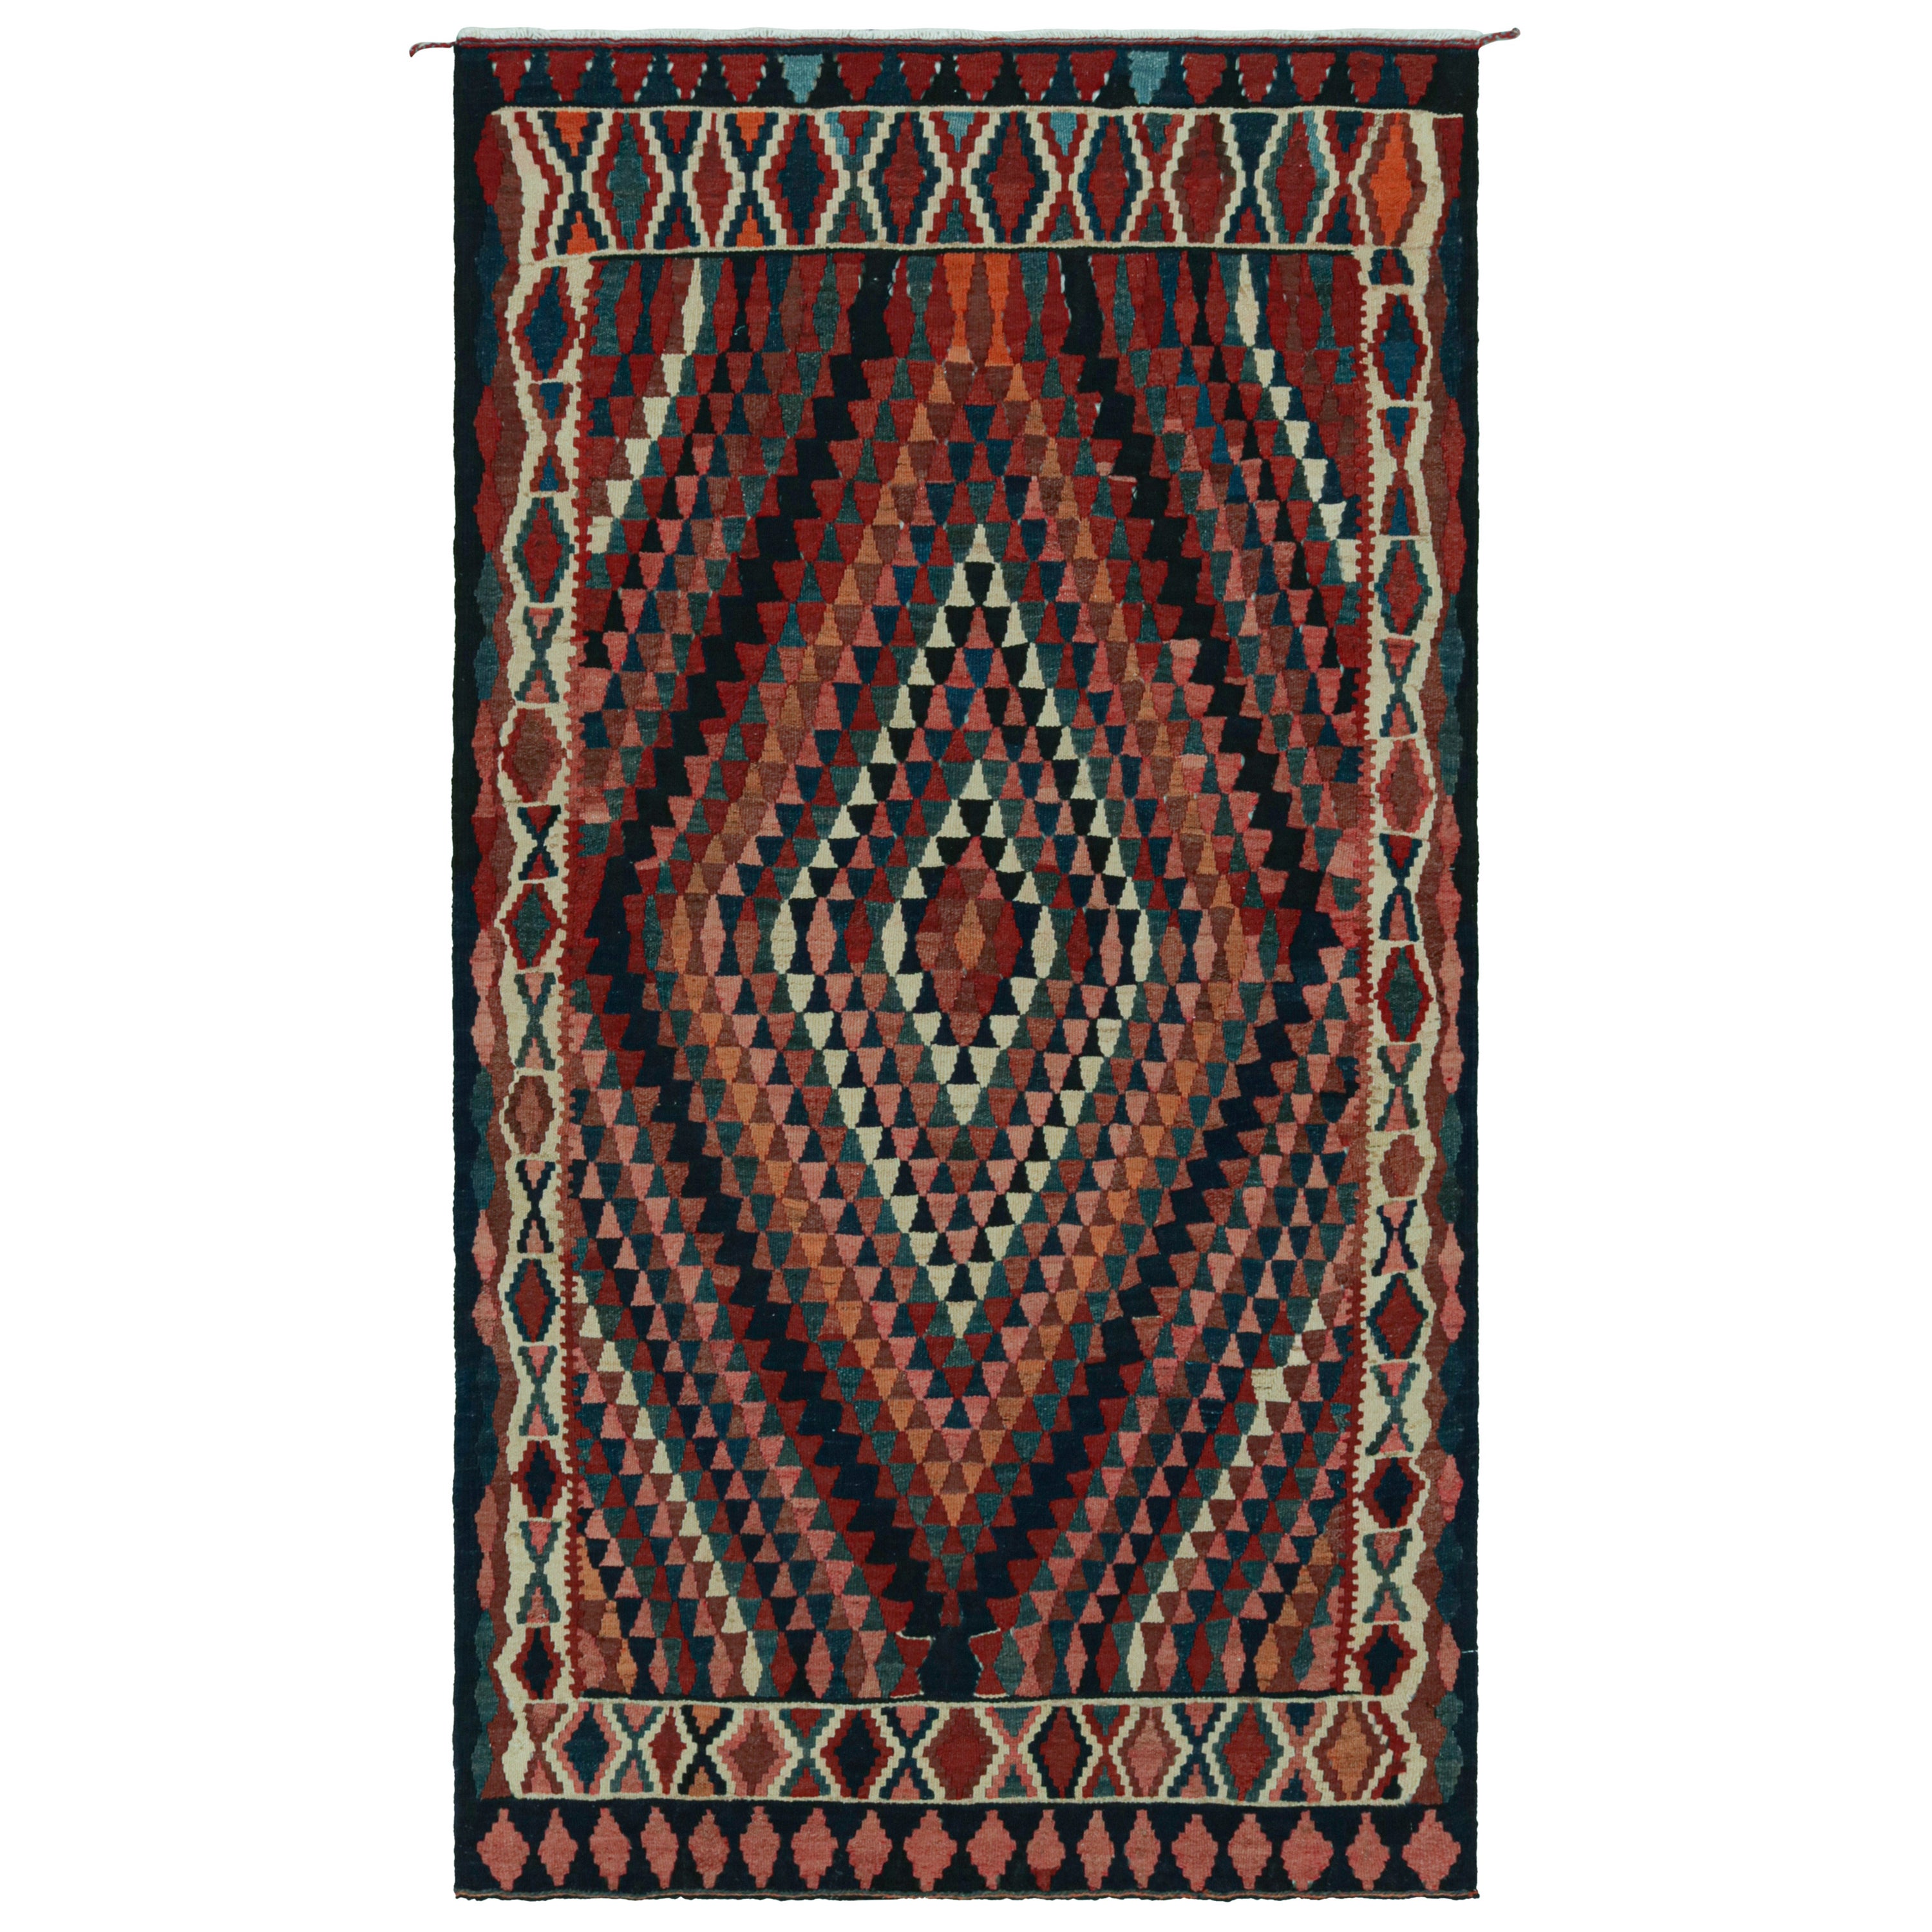 Vintage Afghan Tribal Kilim with Colorful Geometric Patterns, from Rug & Kilim